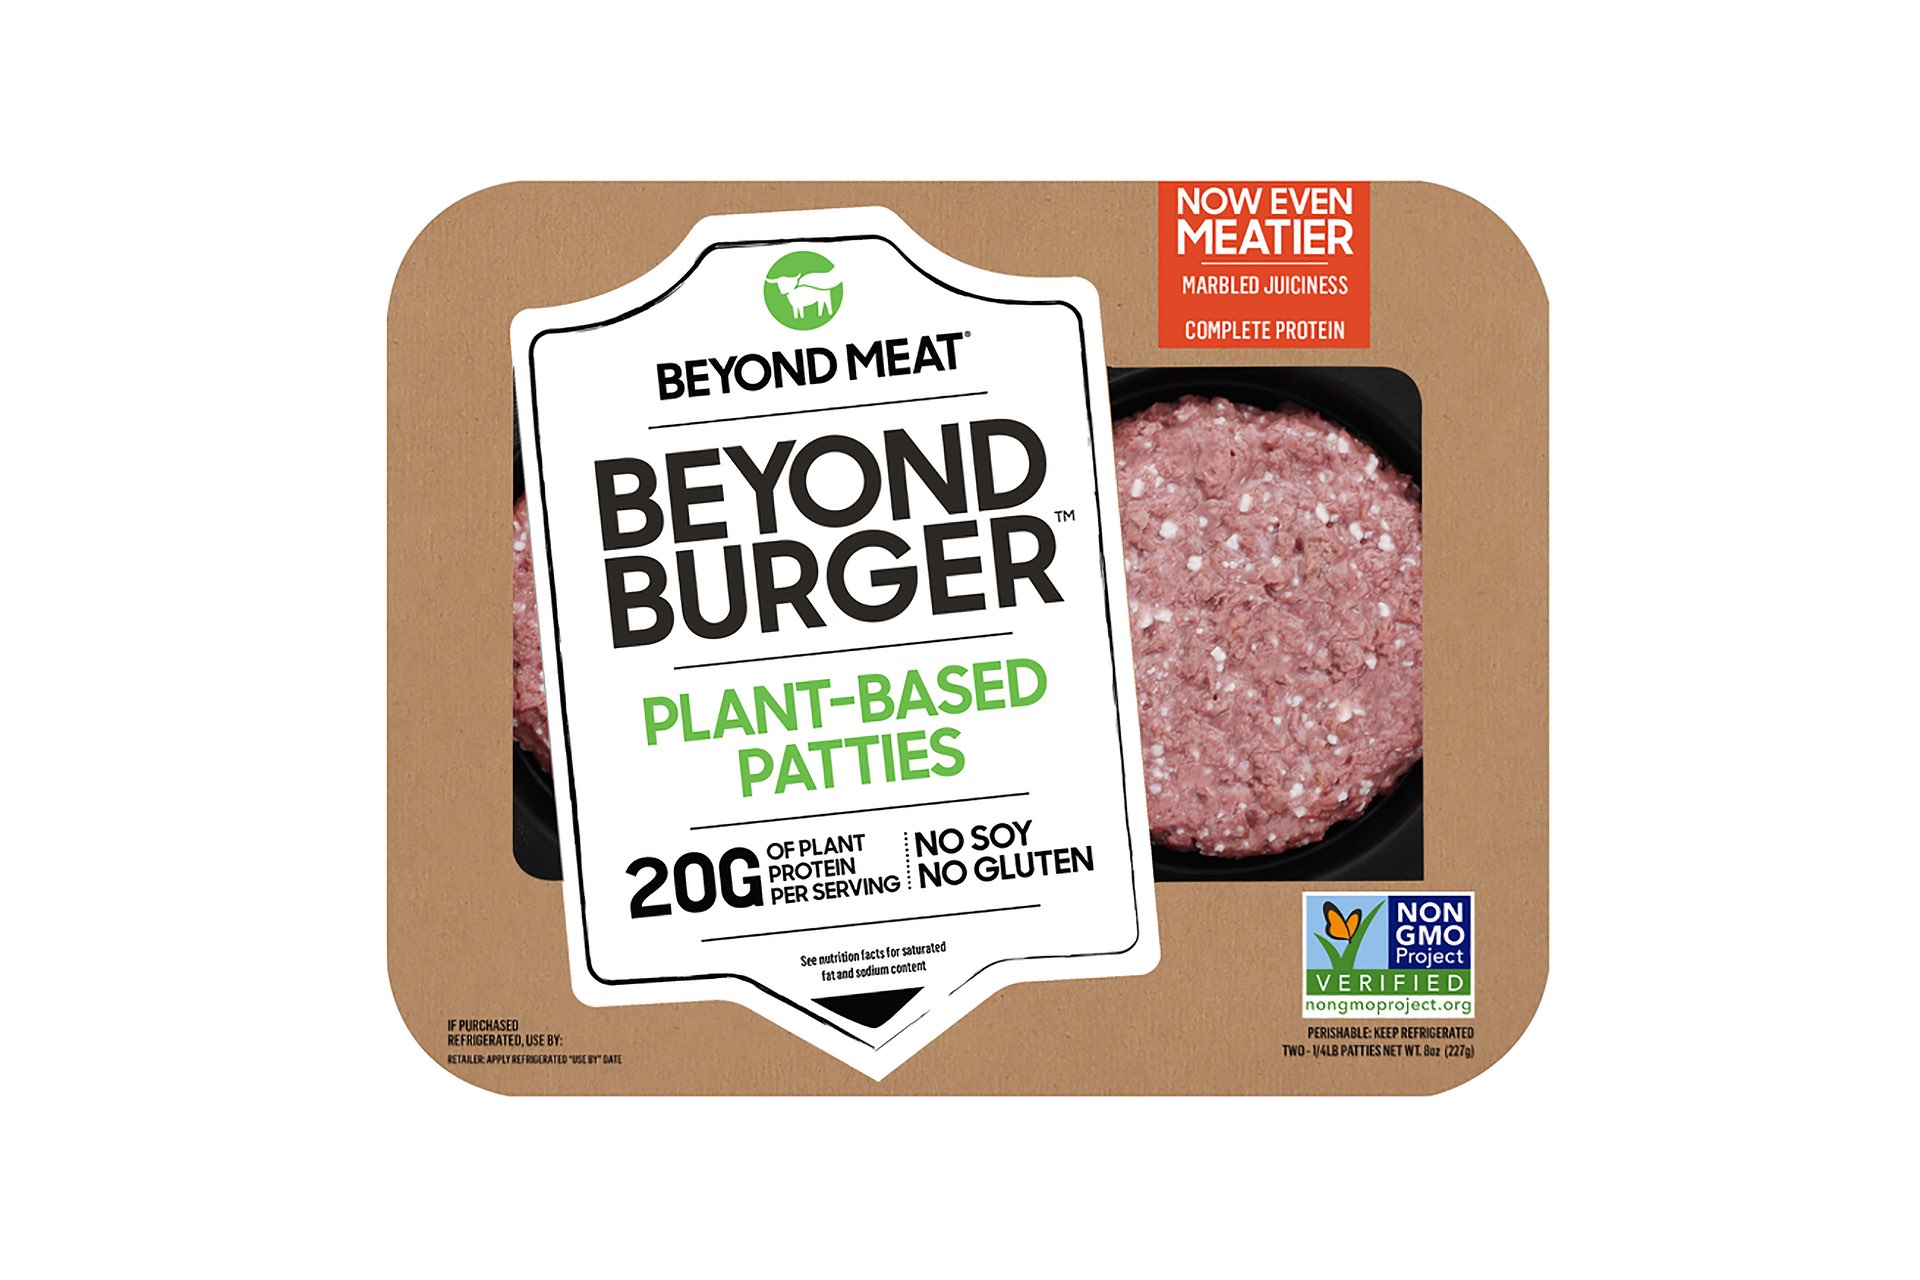 Beyond Burger plant-based “meat” patties